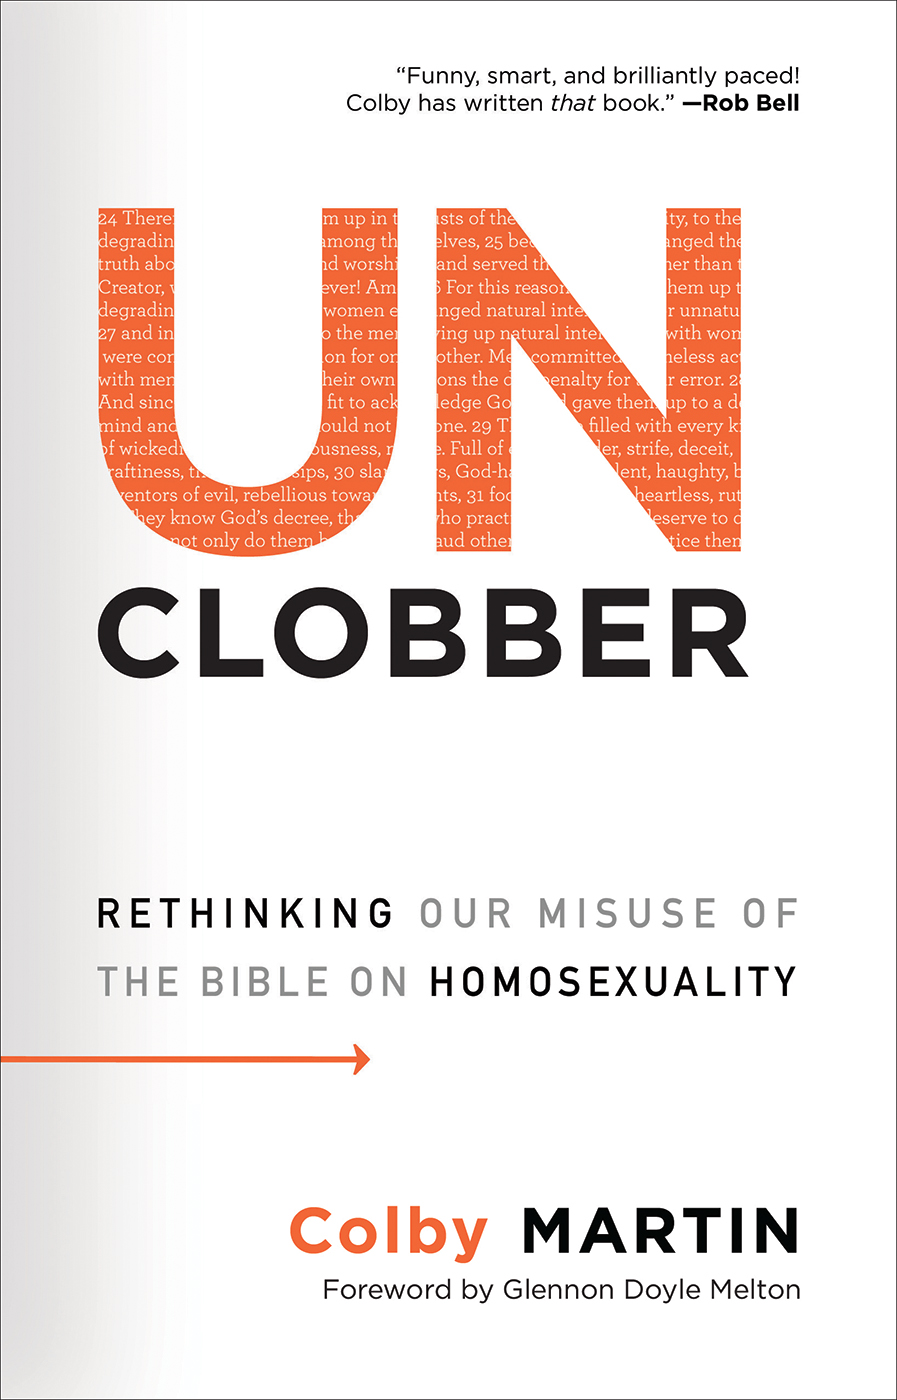 Colby Martin: Unclobber (Paperback, 2016, Westminster John Knox Press)